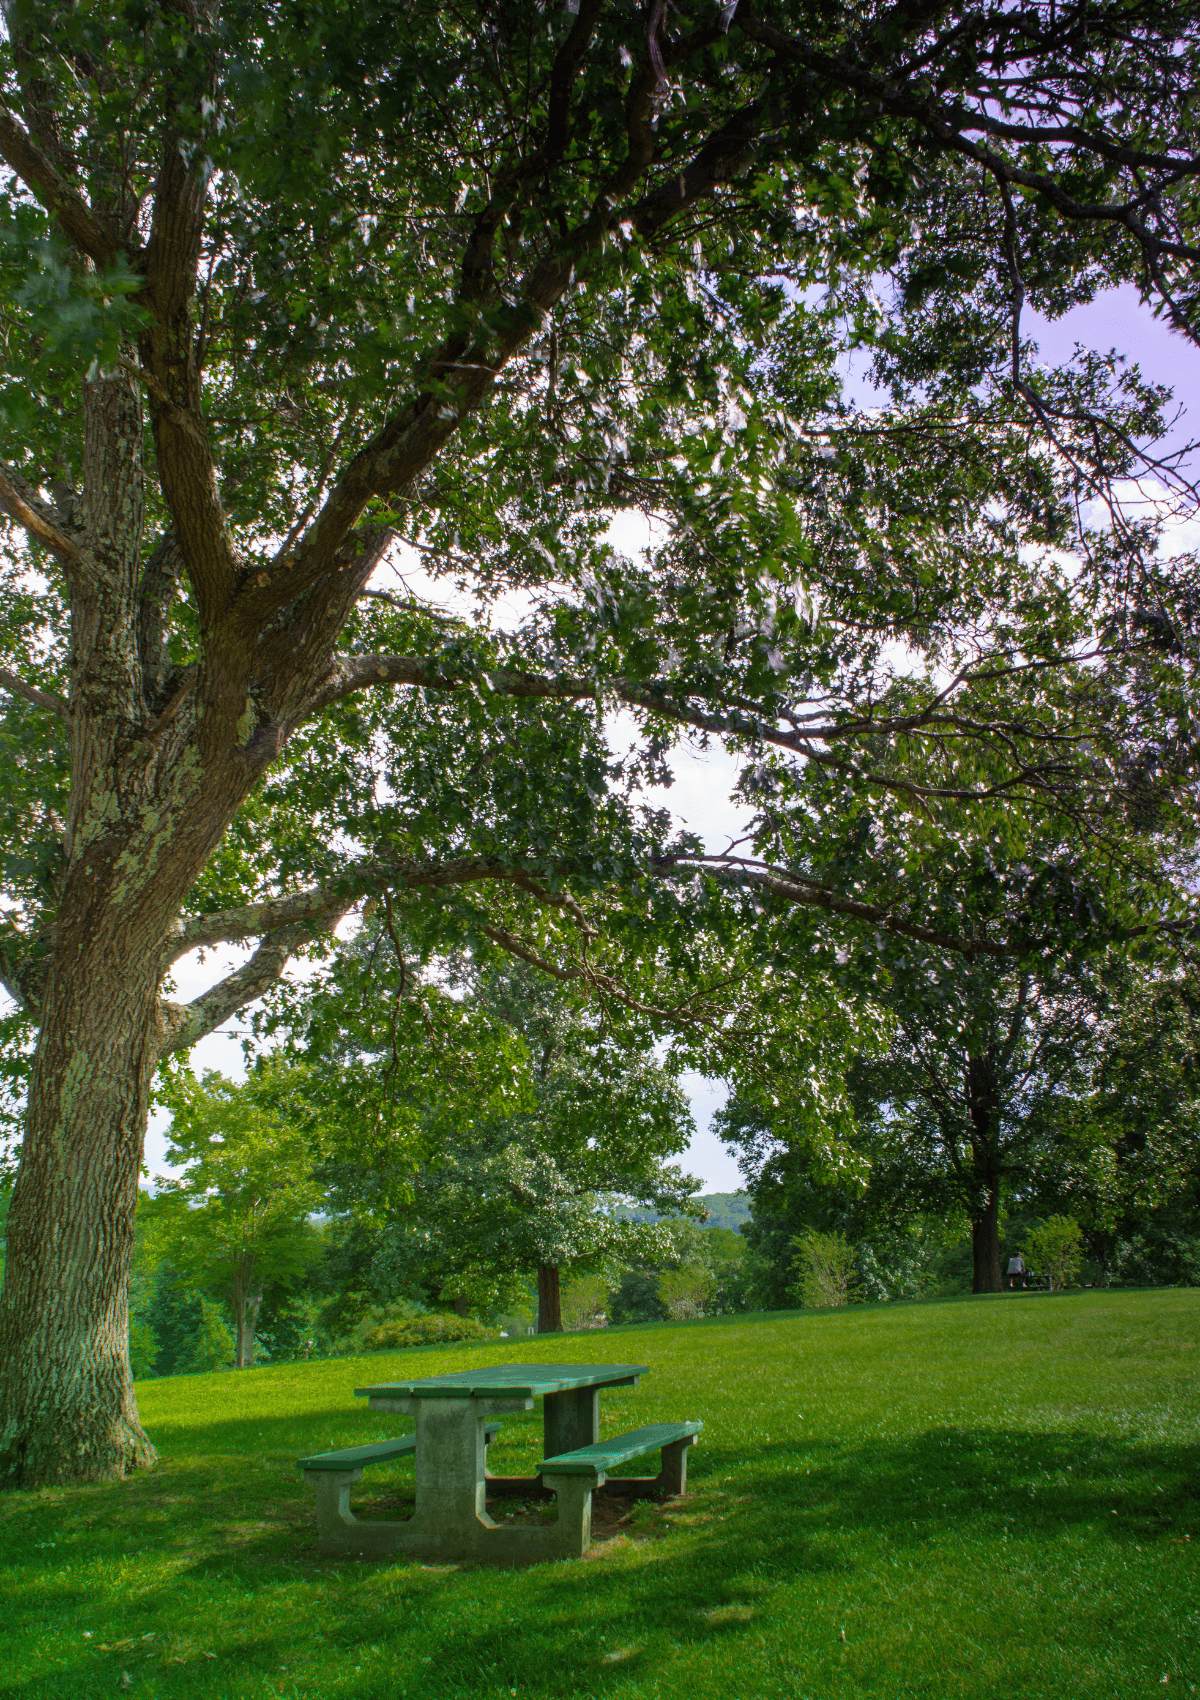 Picnic area in the park 